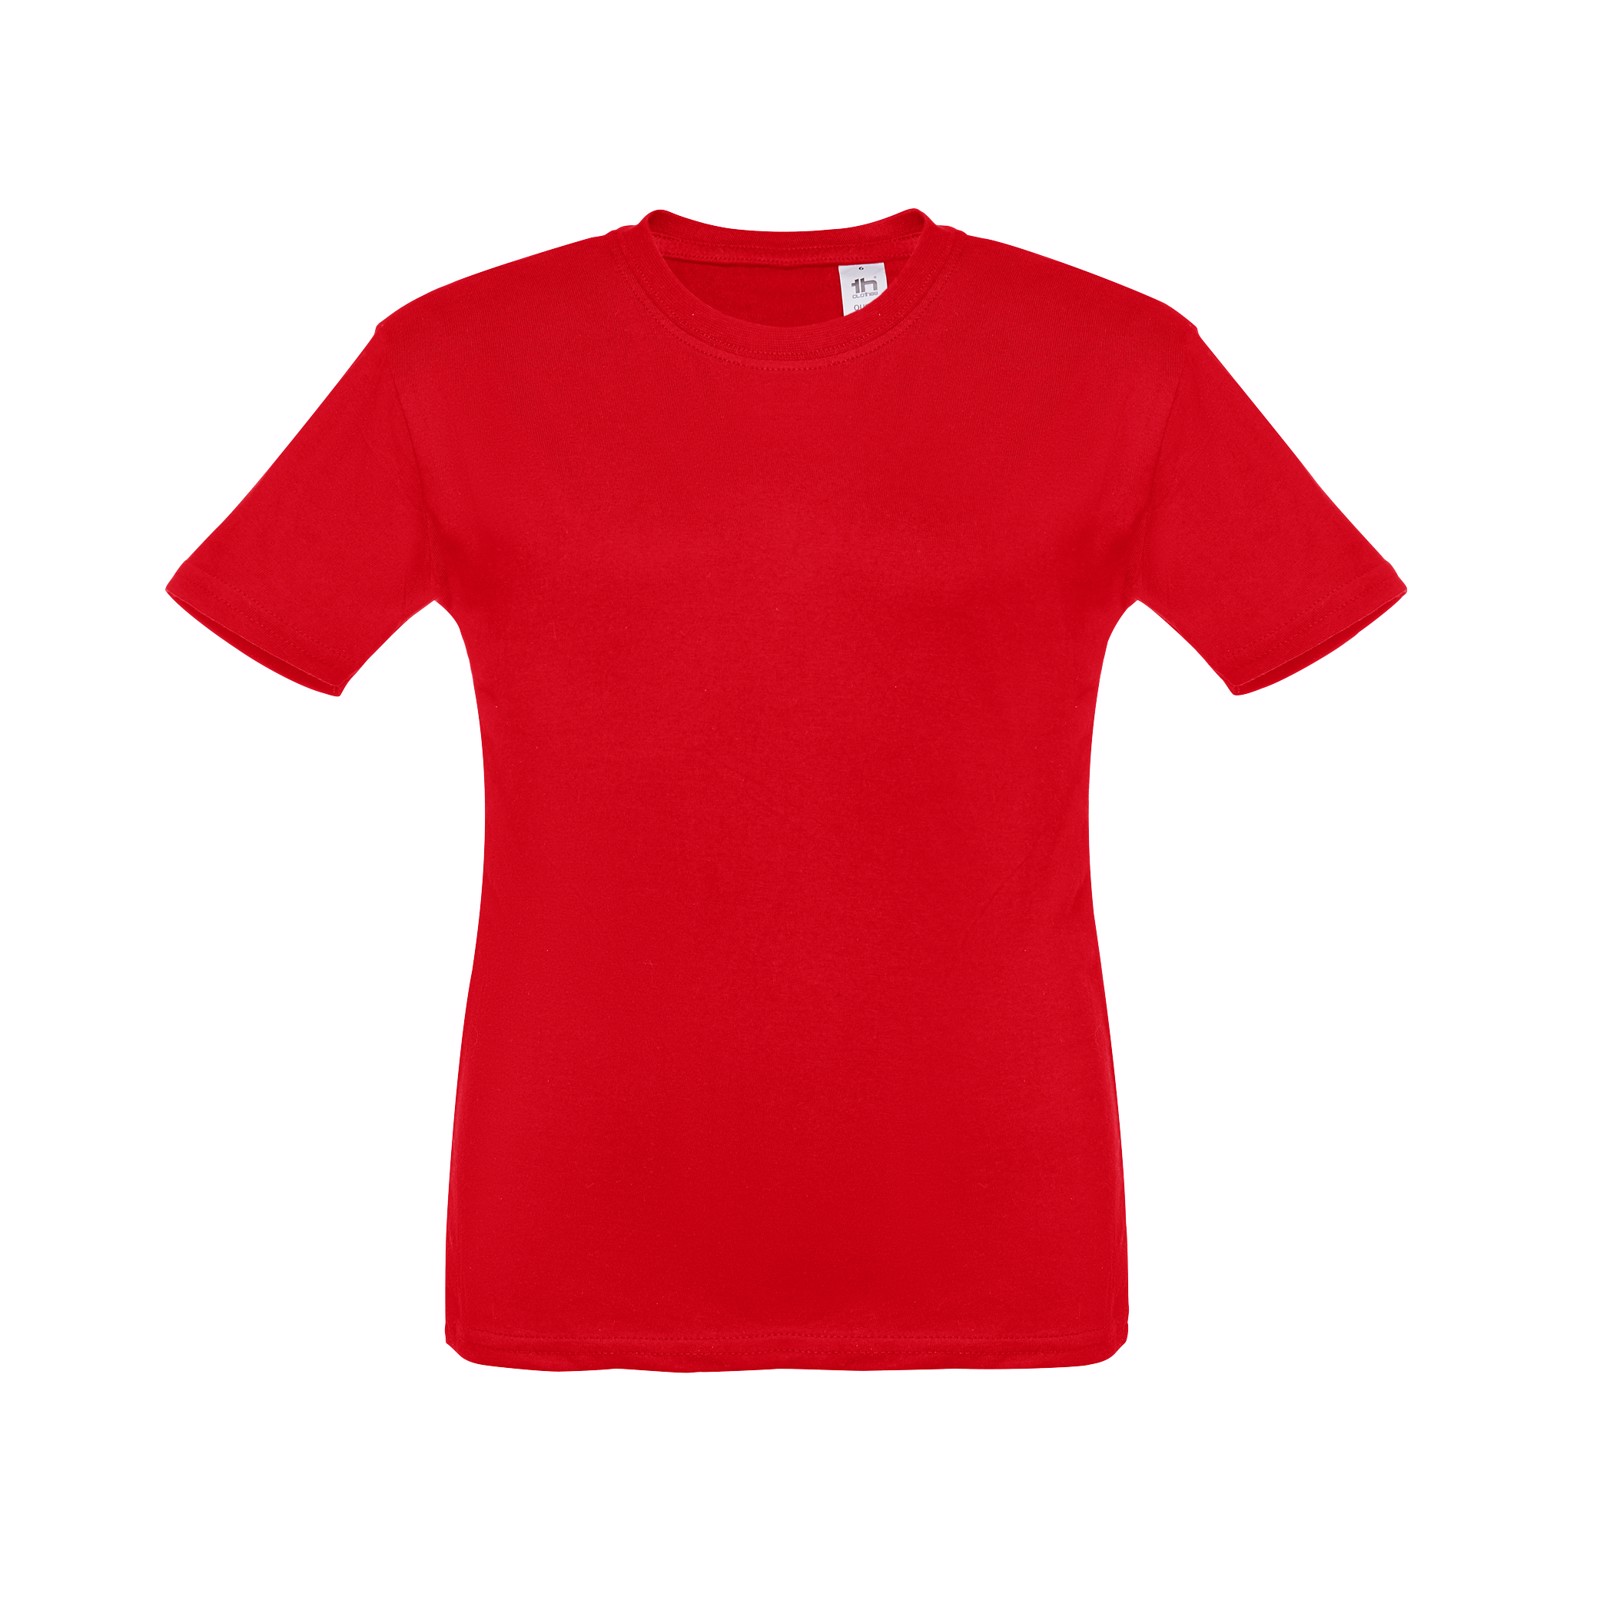 THC ANKARA KIDS. Children's t-shirt - Red / 2